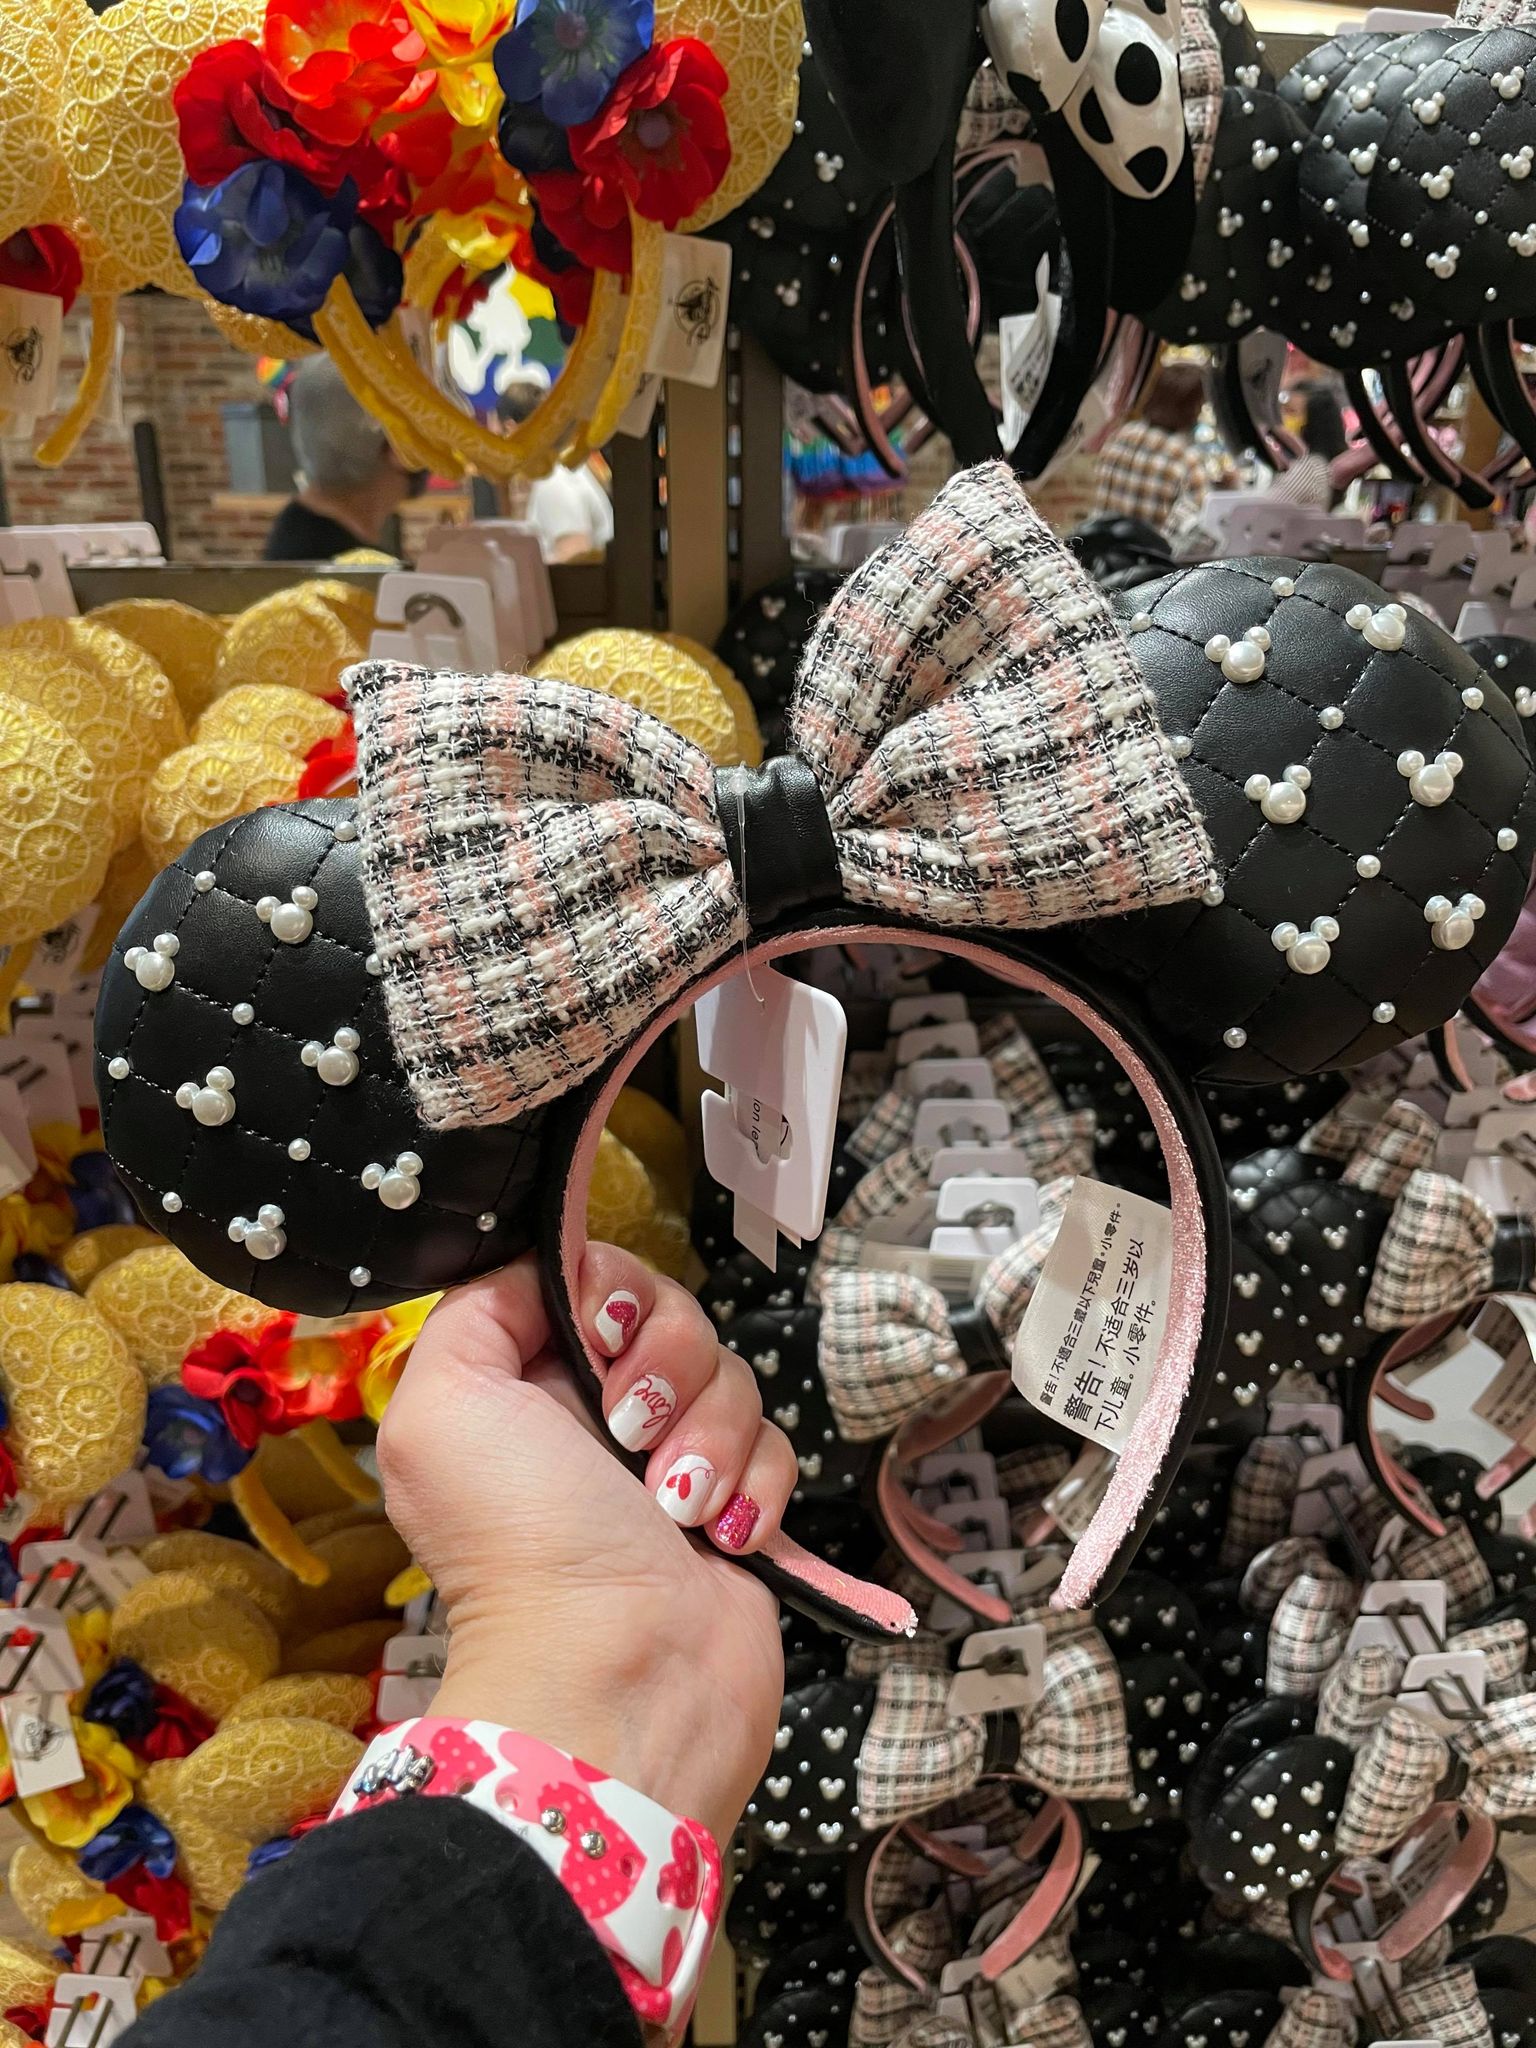 New Fashionable Ears Have Arrived At Walt Disney World Resort Ears